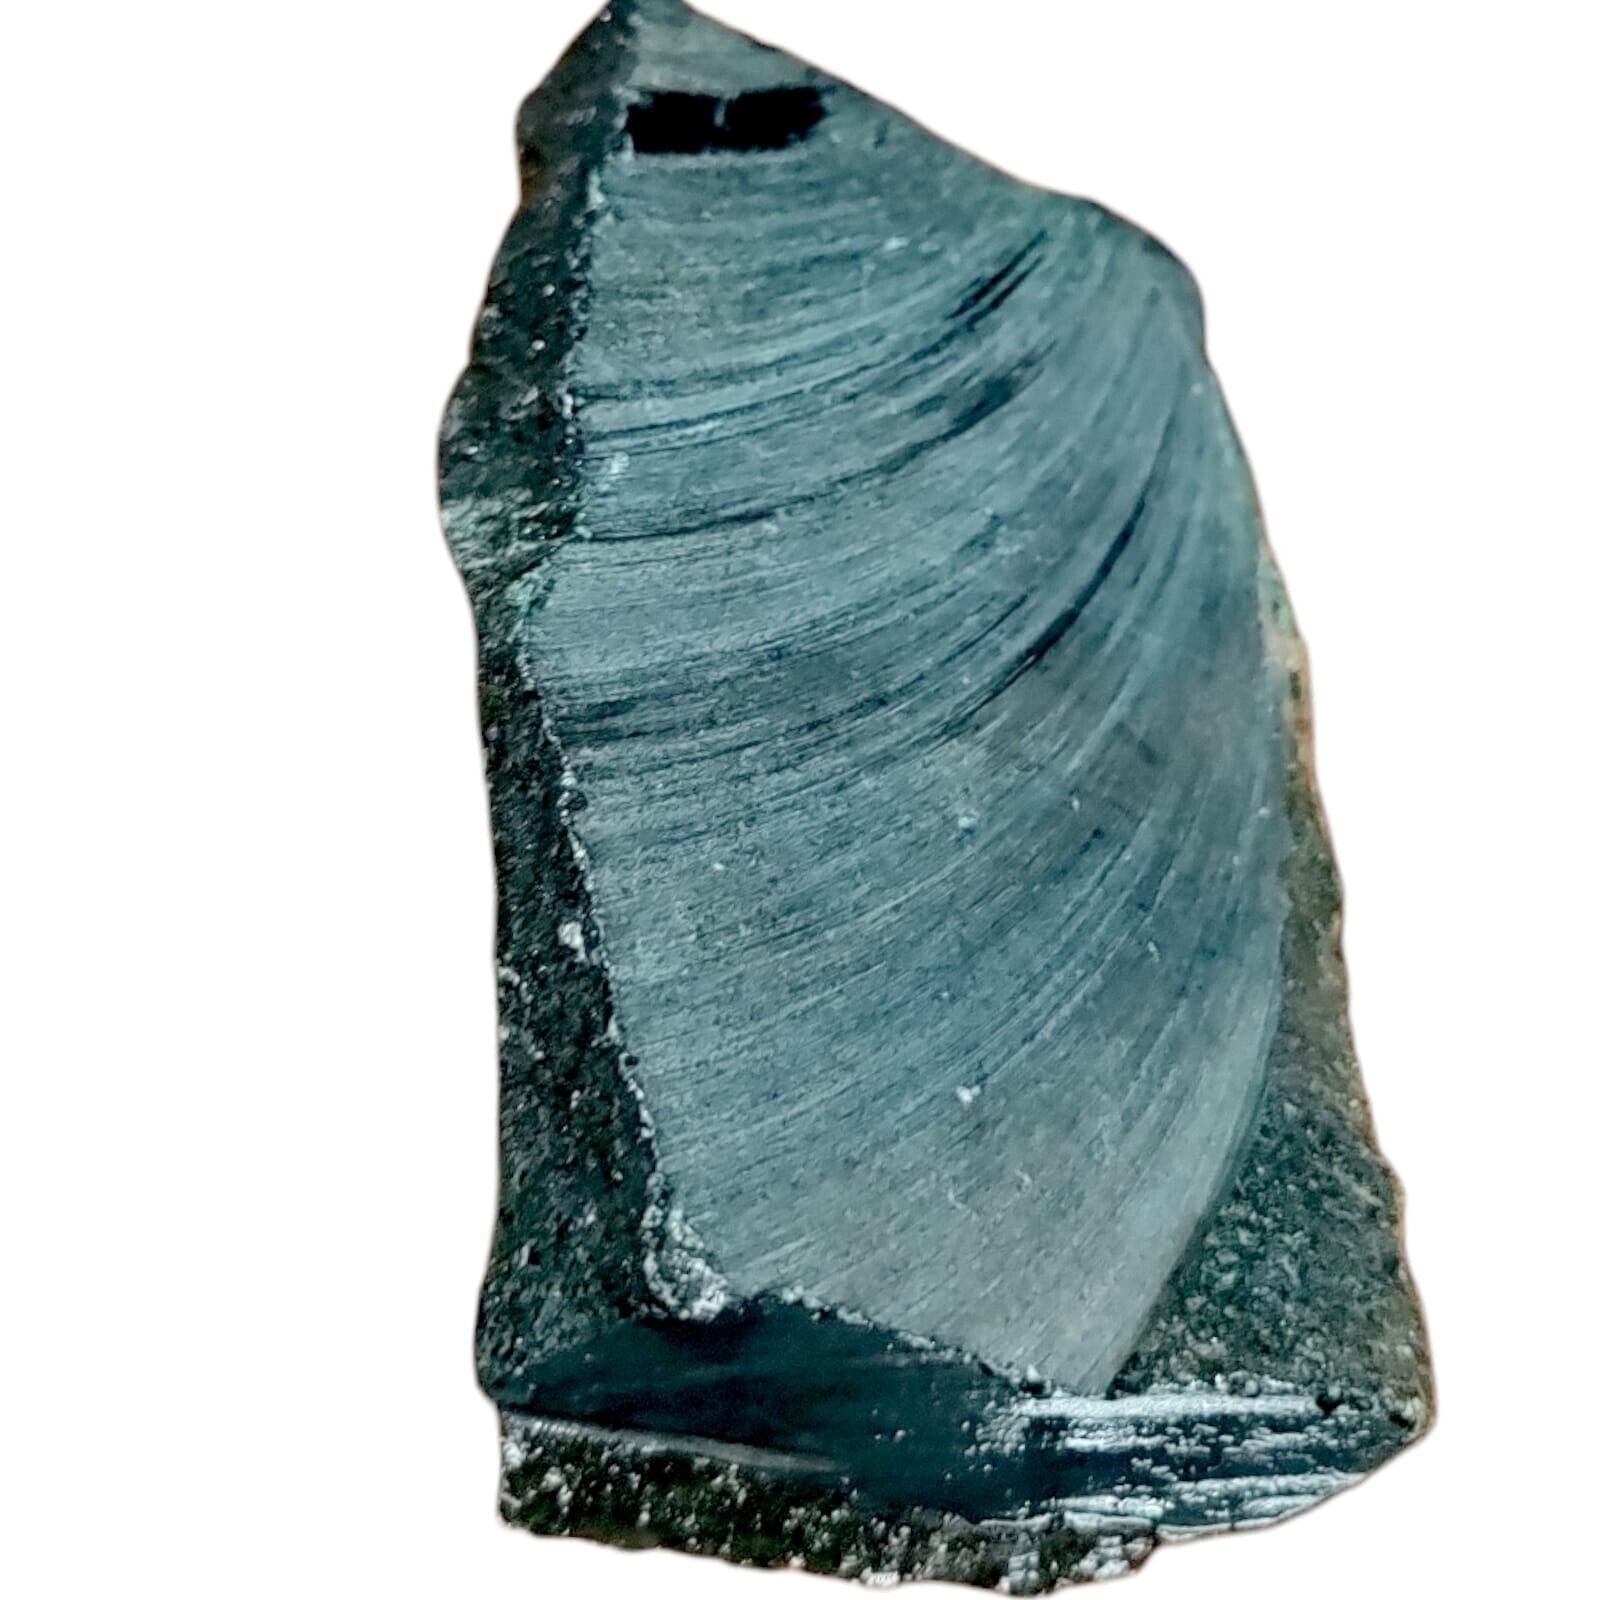 2.2Lb Guatemalan Black Jadeite | Massive Rough Stone | Jade High Quality 